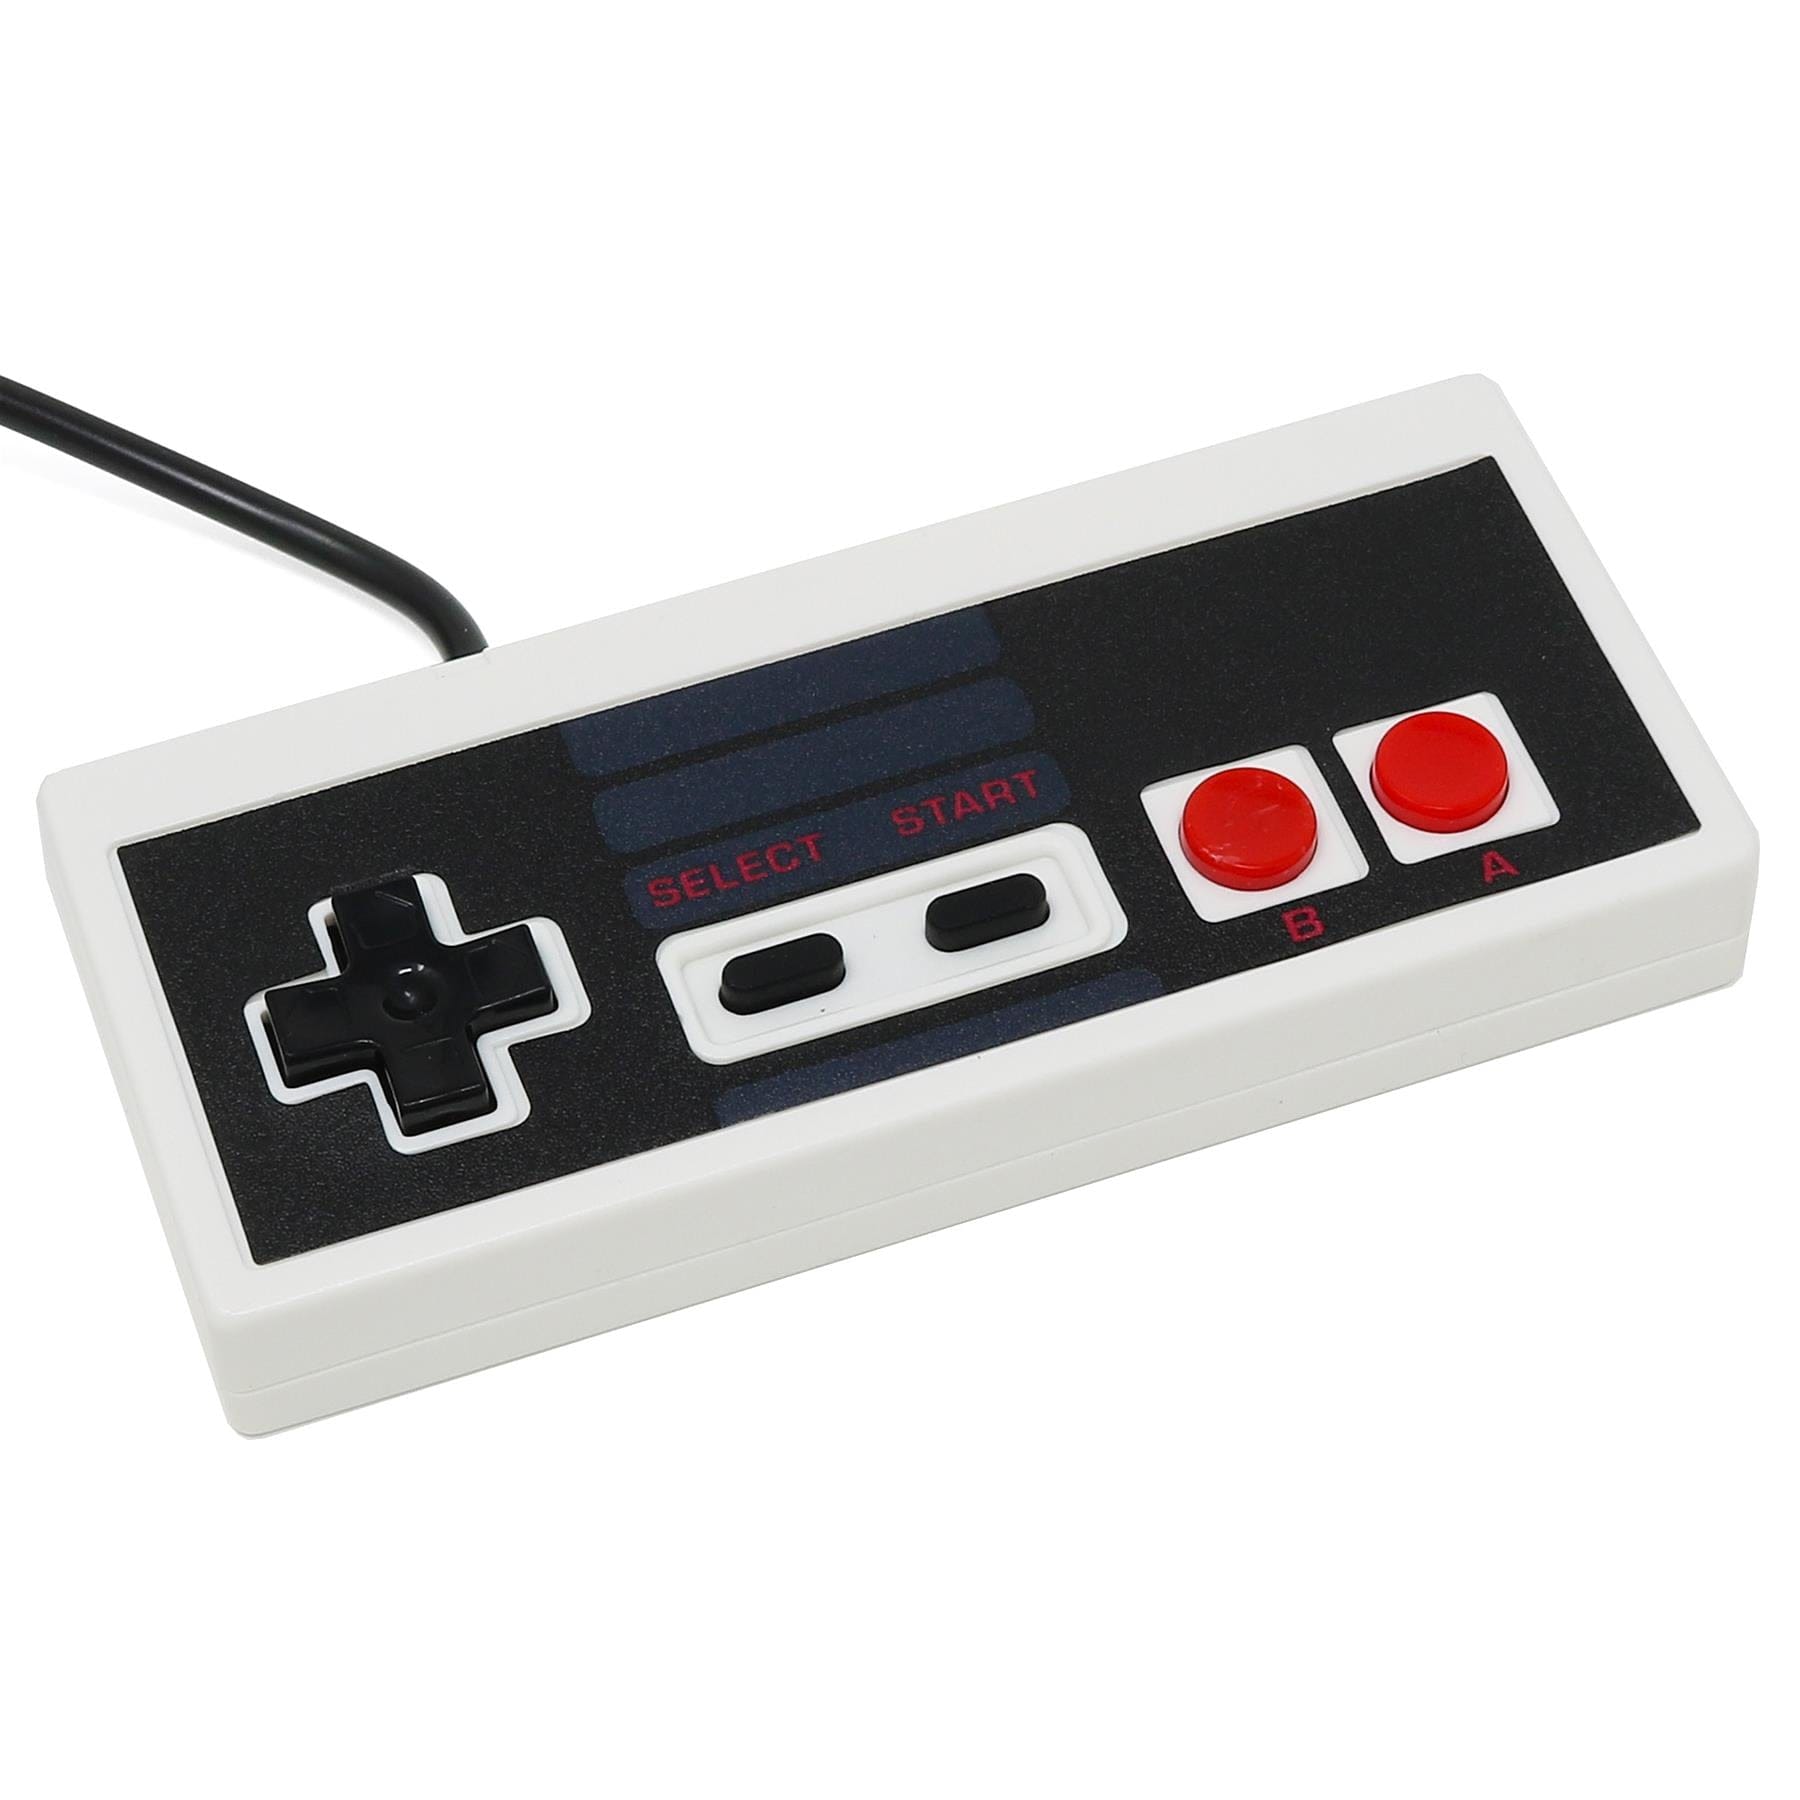 NES-Style Pi Compatible USB Gamepad